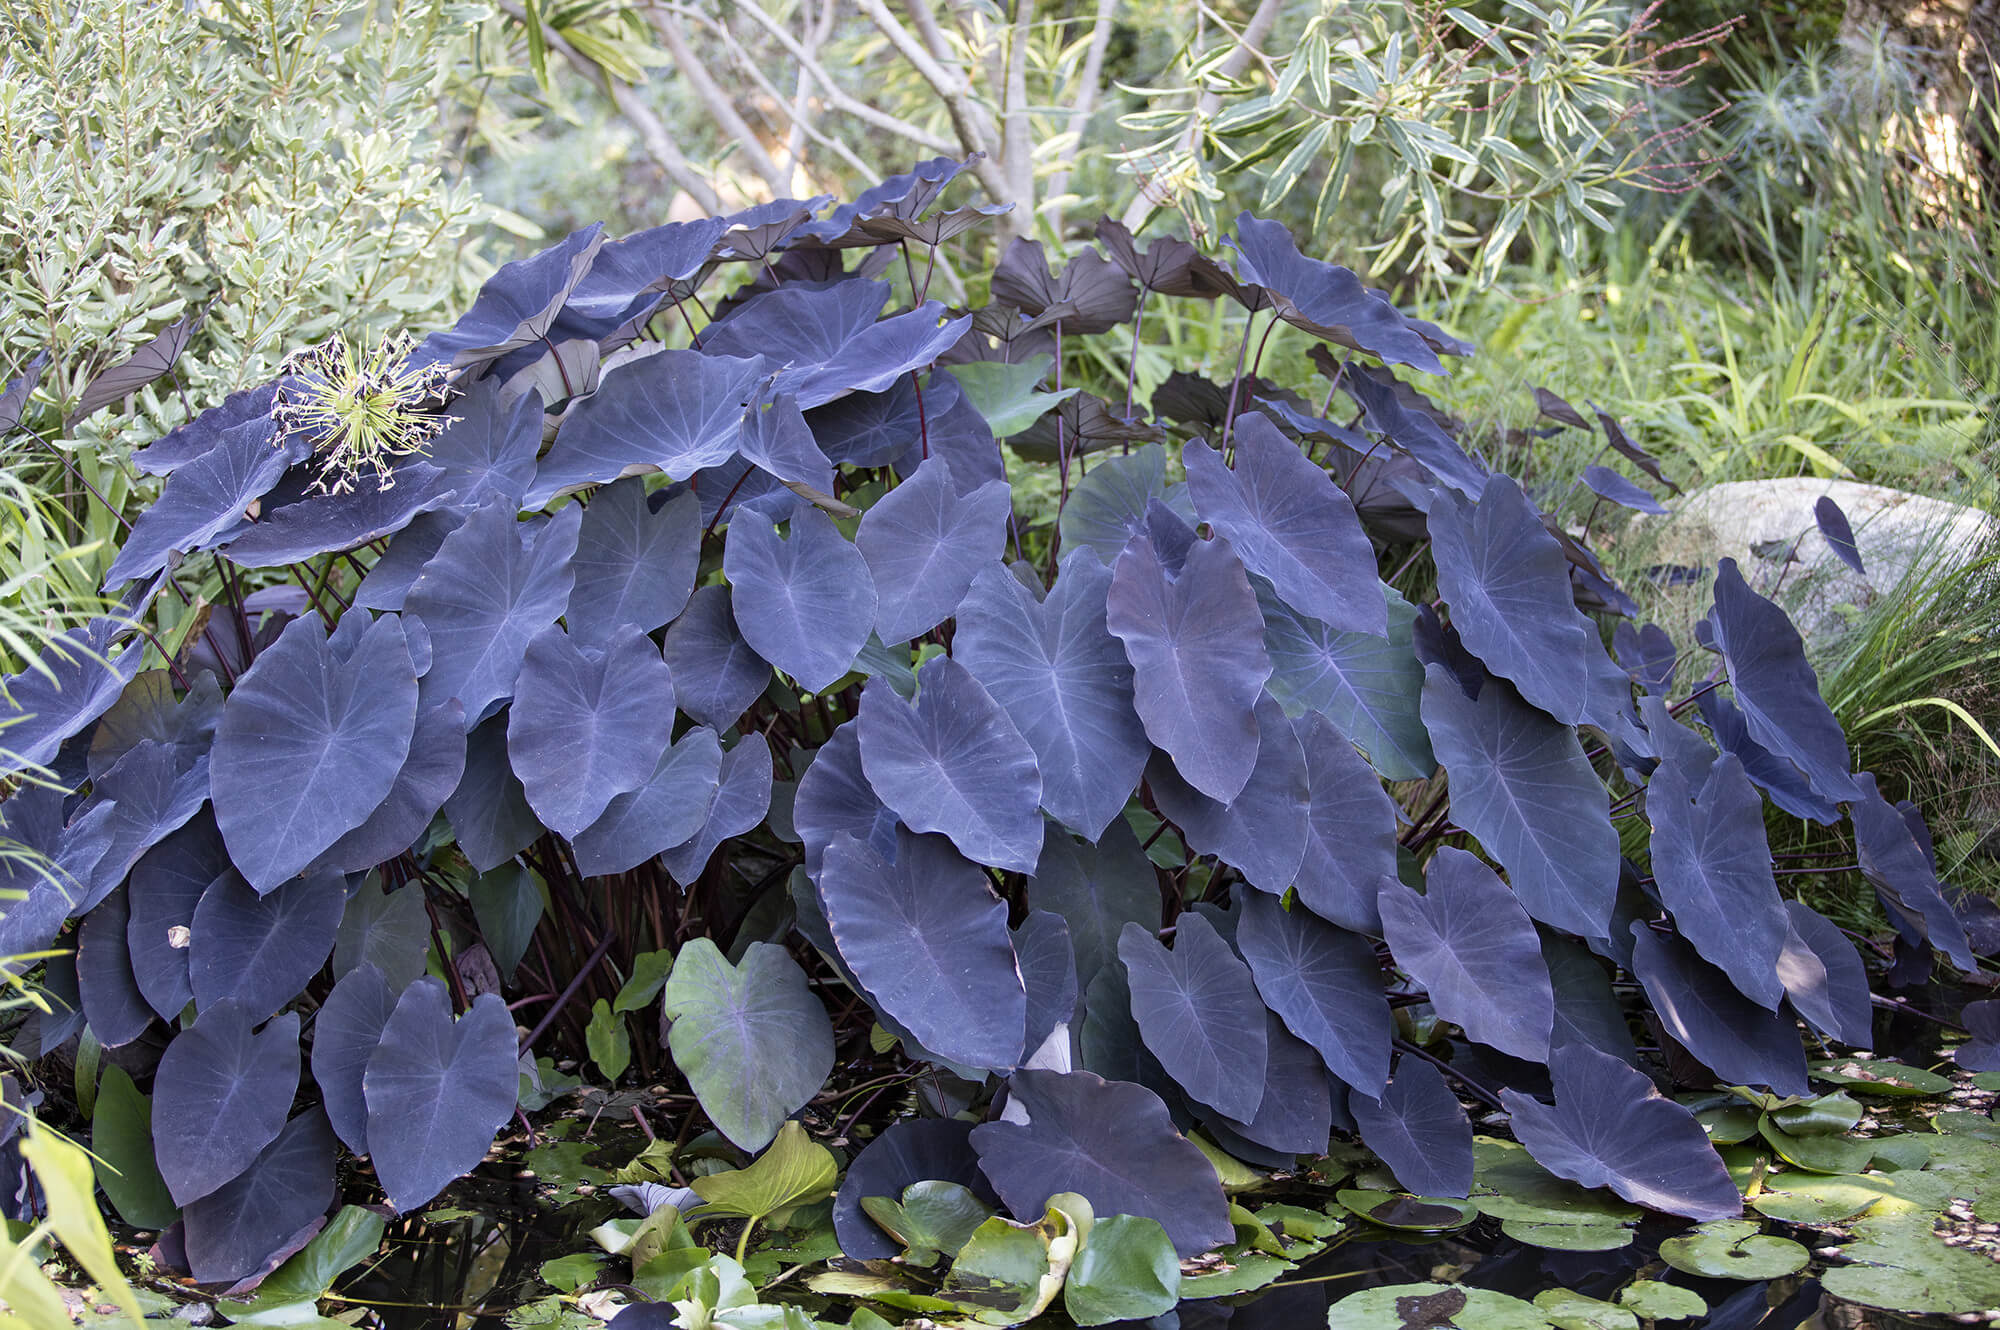 Colocasia rubra 'Black Magic' - Taro Black Magic plante fleur bassin de jardin etang